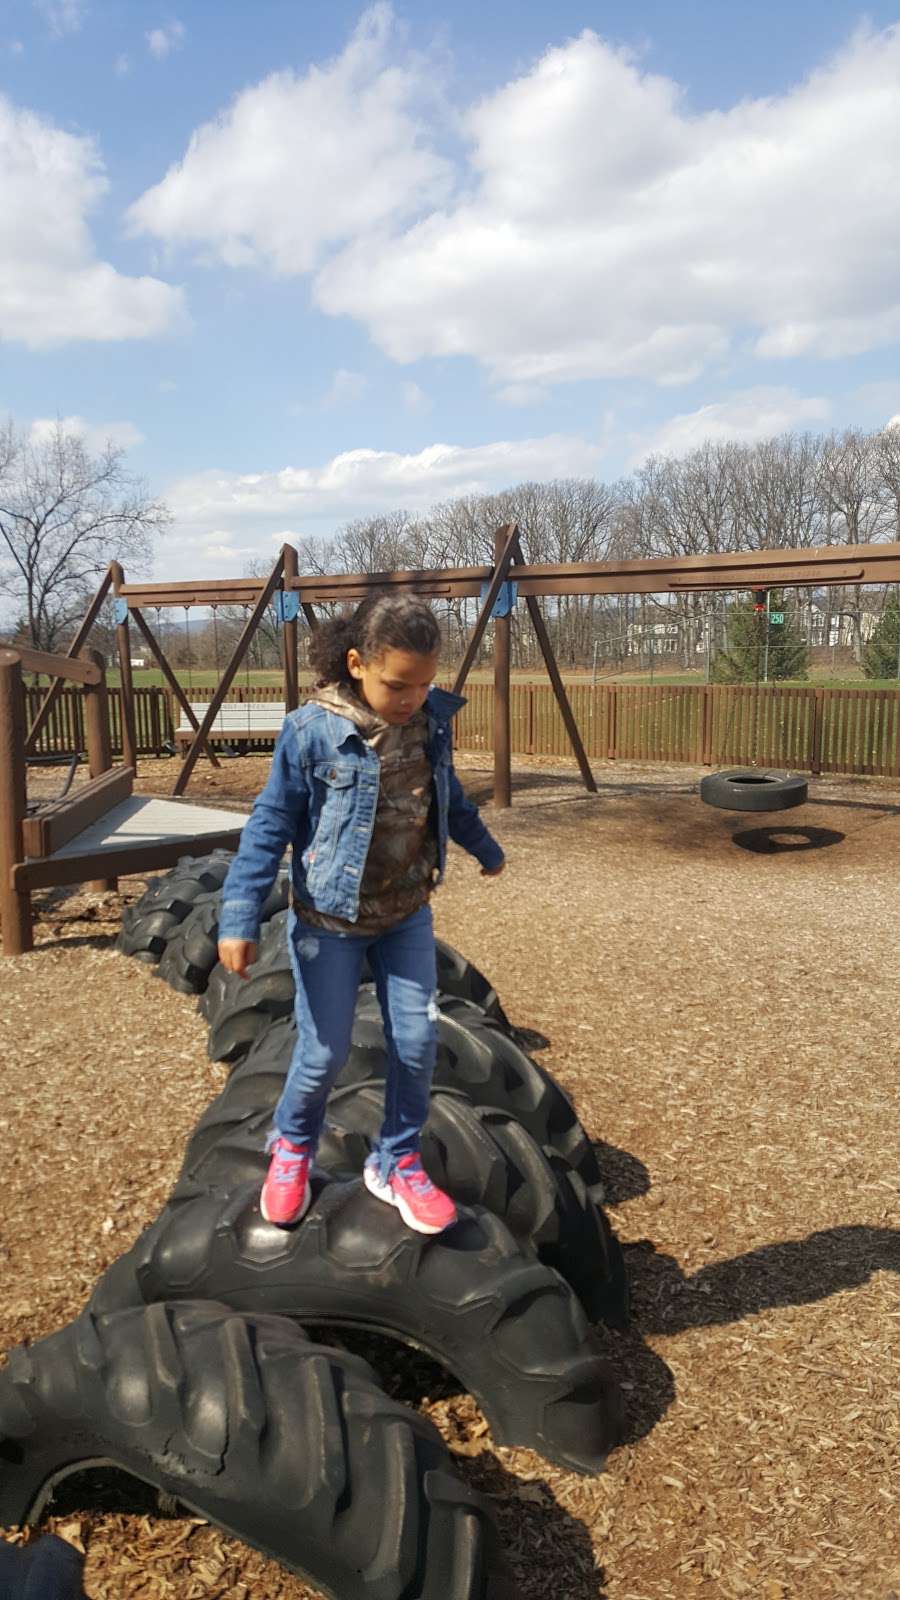 Kids Kingdom Playground | Photo 8 of 10 | Address: 4601 Grandview Rd, Hanover, PA 17331, USA | Phone: (717) 632-7366